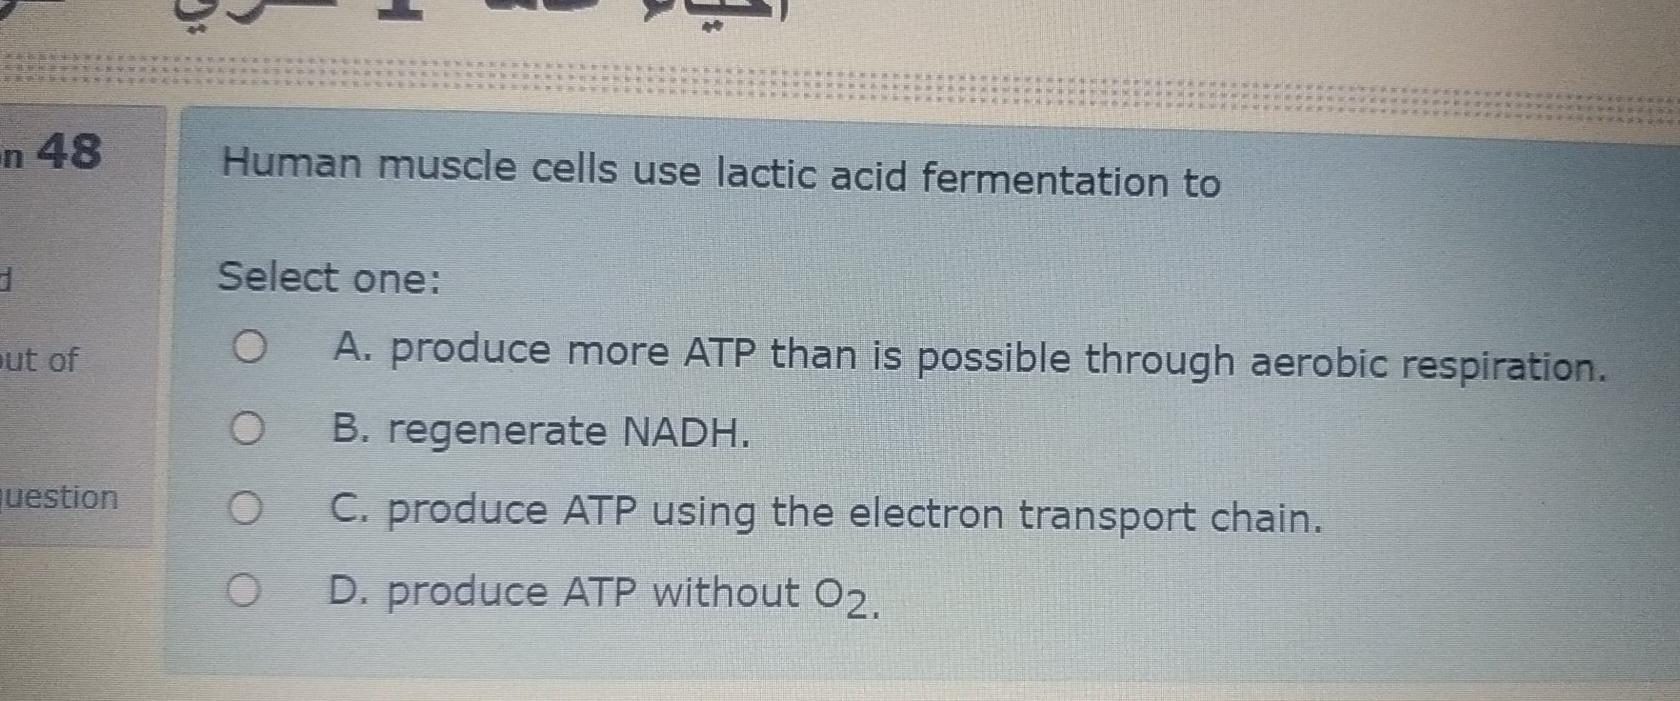 lactic acid fermentation in muscle cells